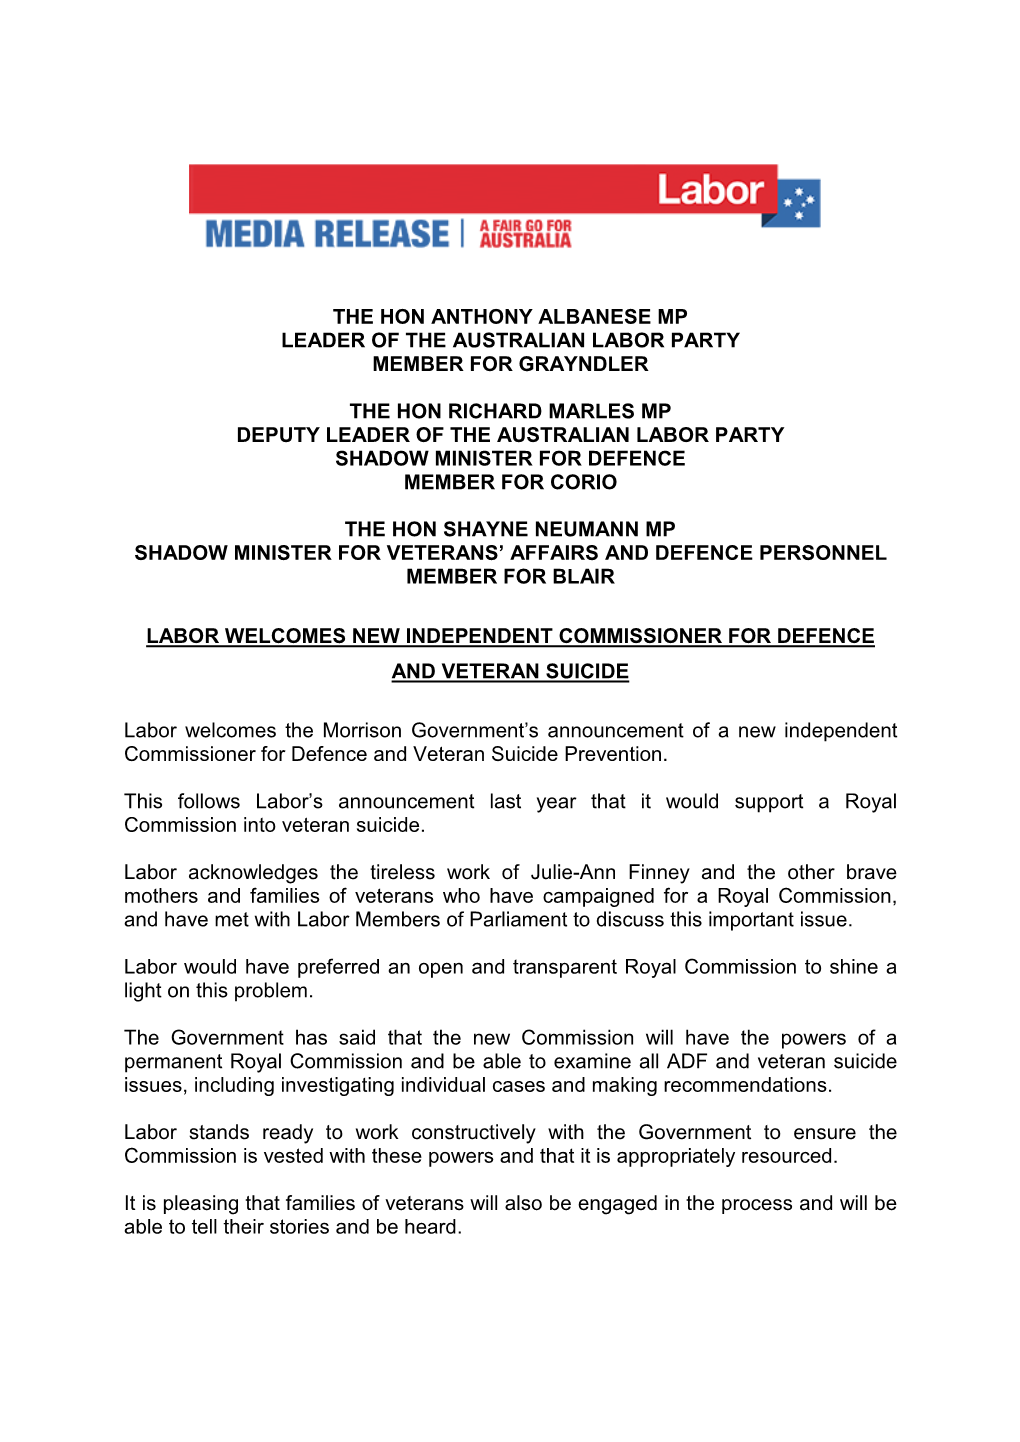 The Hon Anthony Albanese Mp Leader of the Australian Labor Party Member for Grayndler